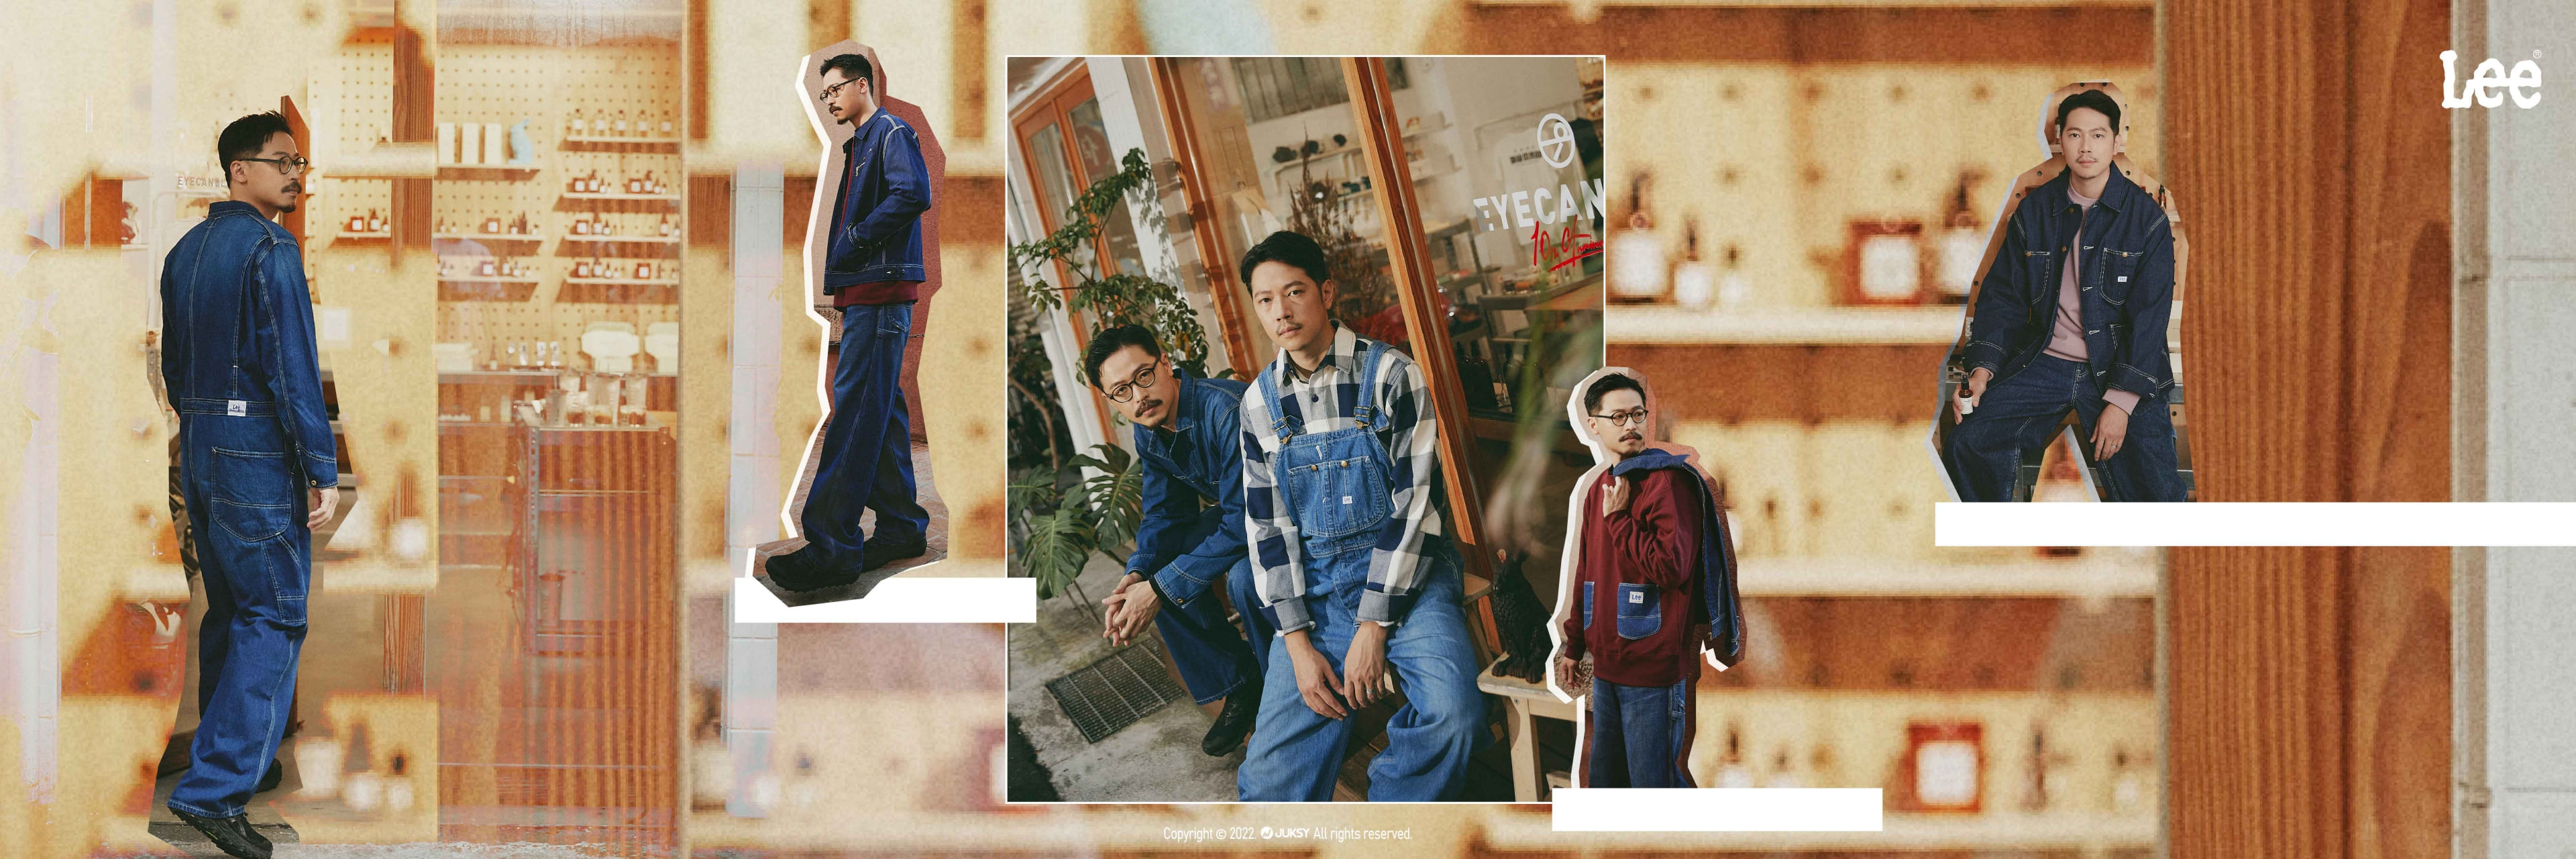 「Reimagined Denim 再譯經典」——  EYECANDLE 主理人兄弟 Kevin & Yuan，加熱後再重塑、不斷調配出不一樣的香氣，穿上 Lee Jeans 一起再造經典！